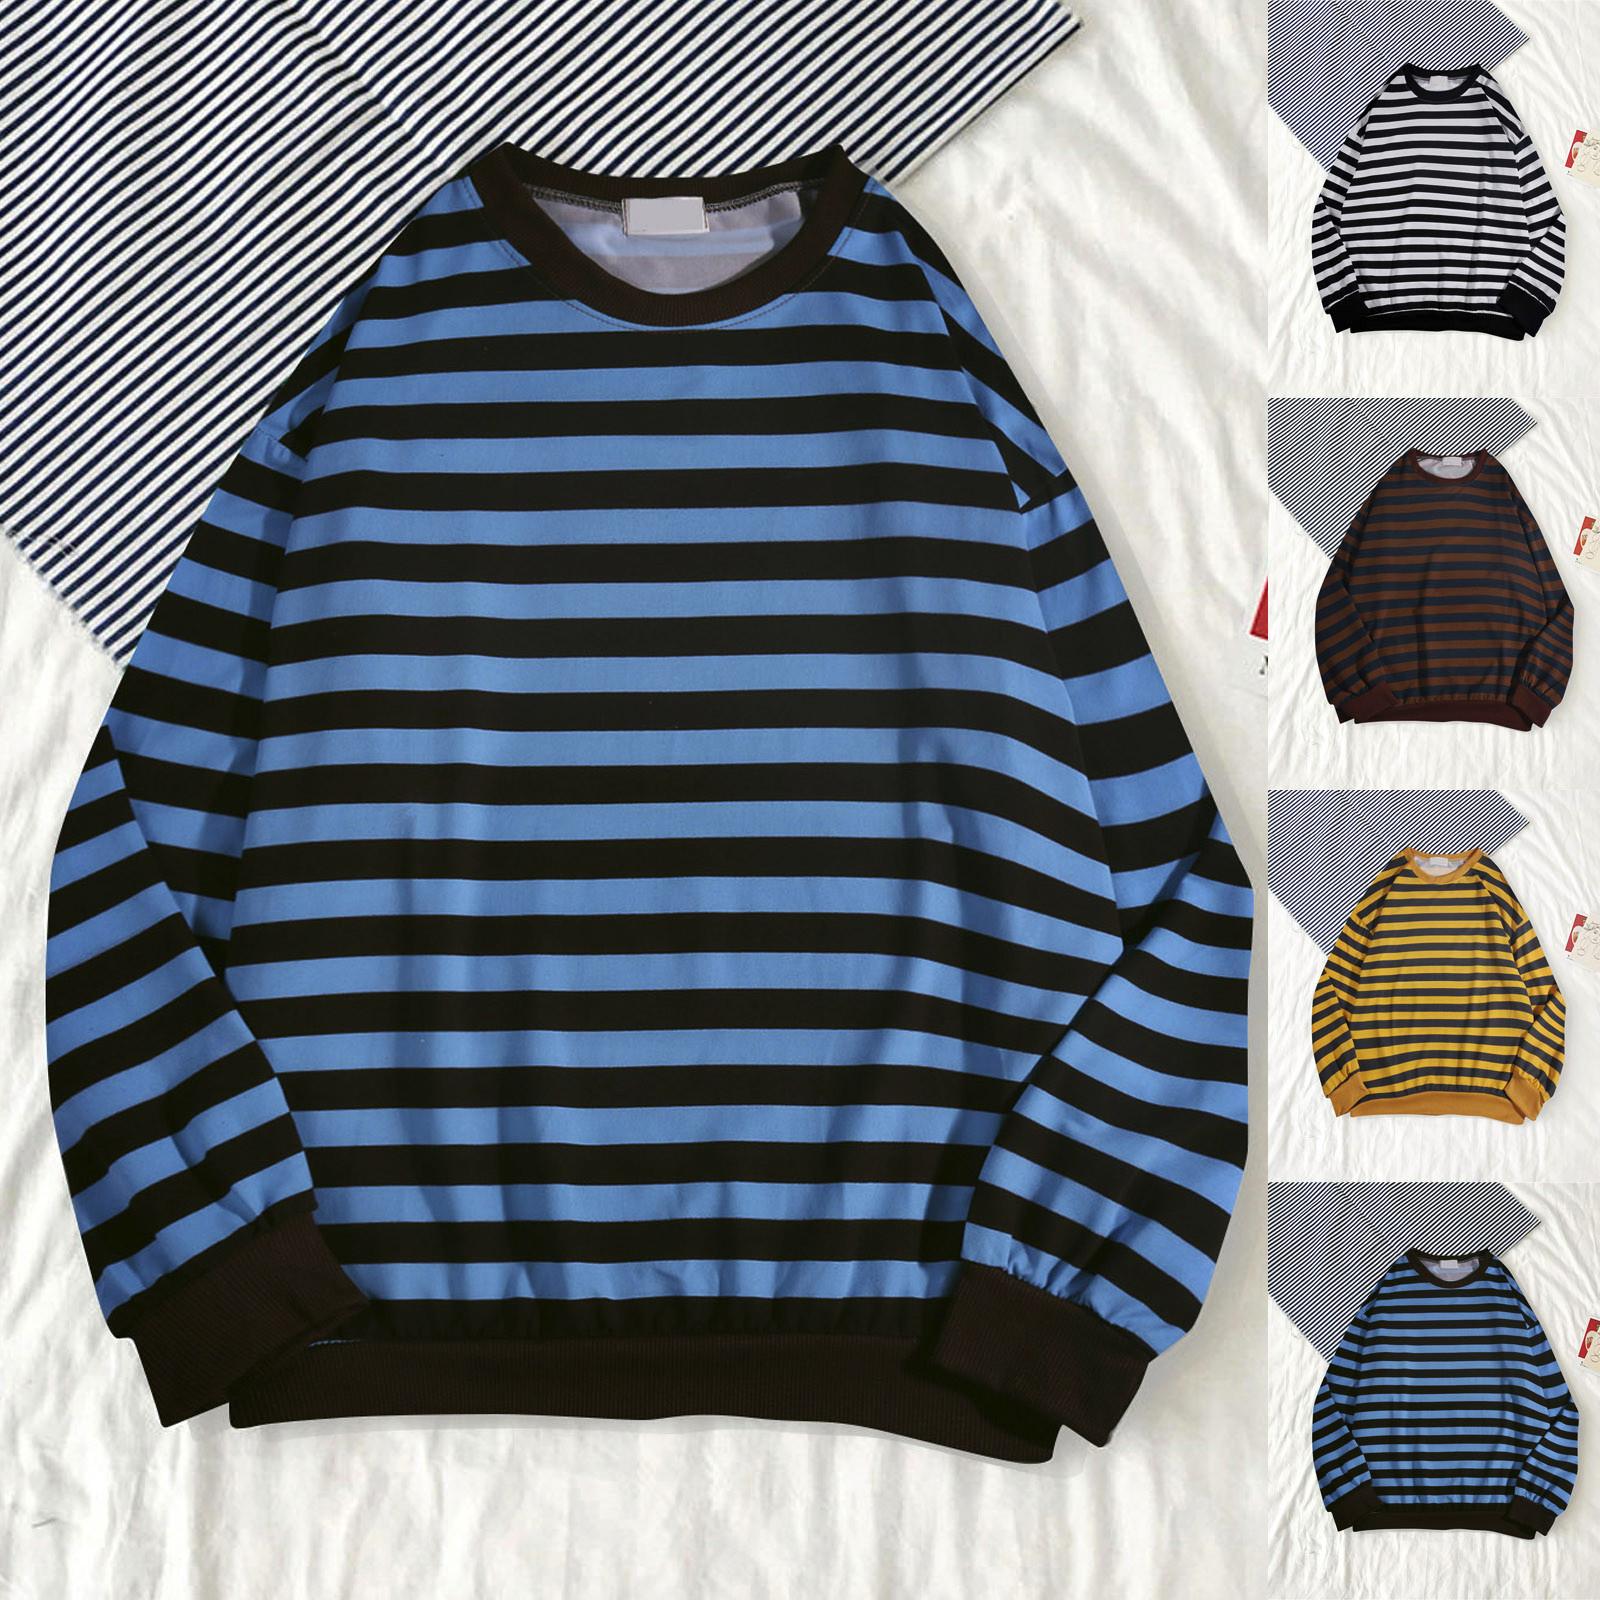 WhyMe Men's Autumn Winter Round Neck Stripe Sweatshirt Pullover Tops Long Sleeved